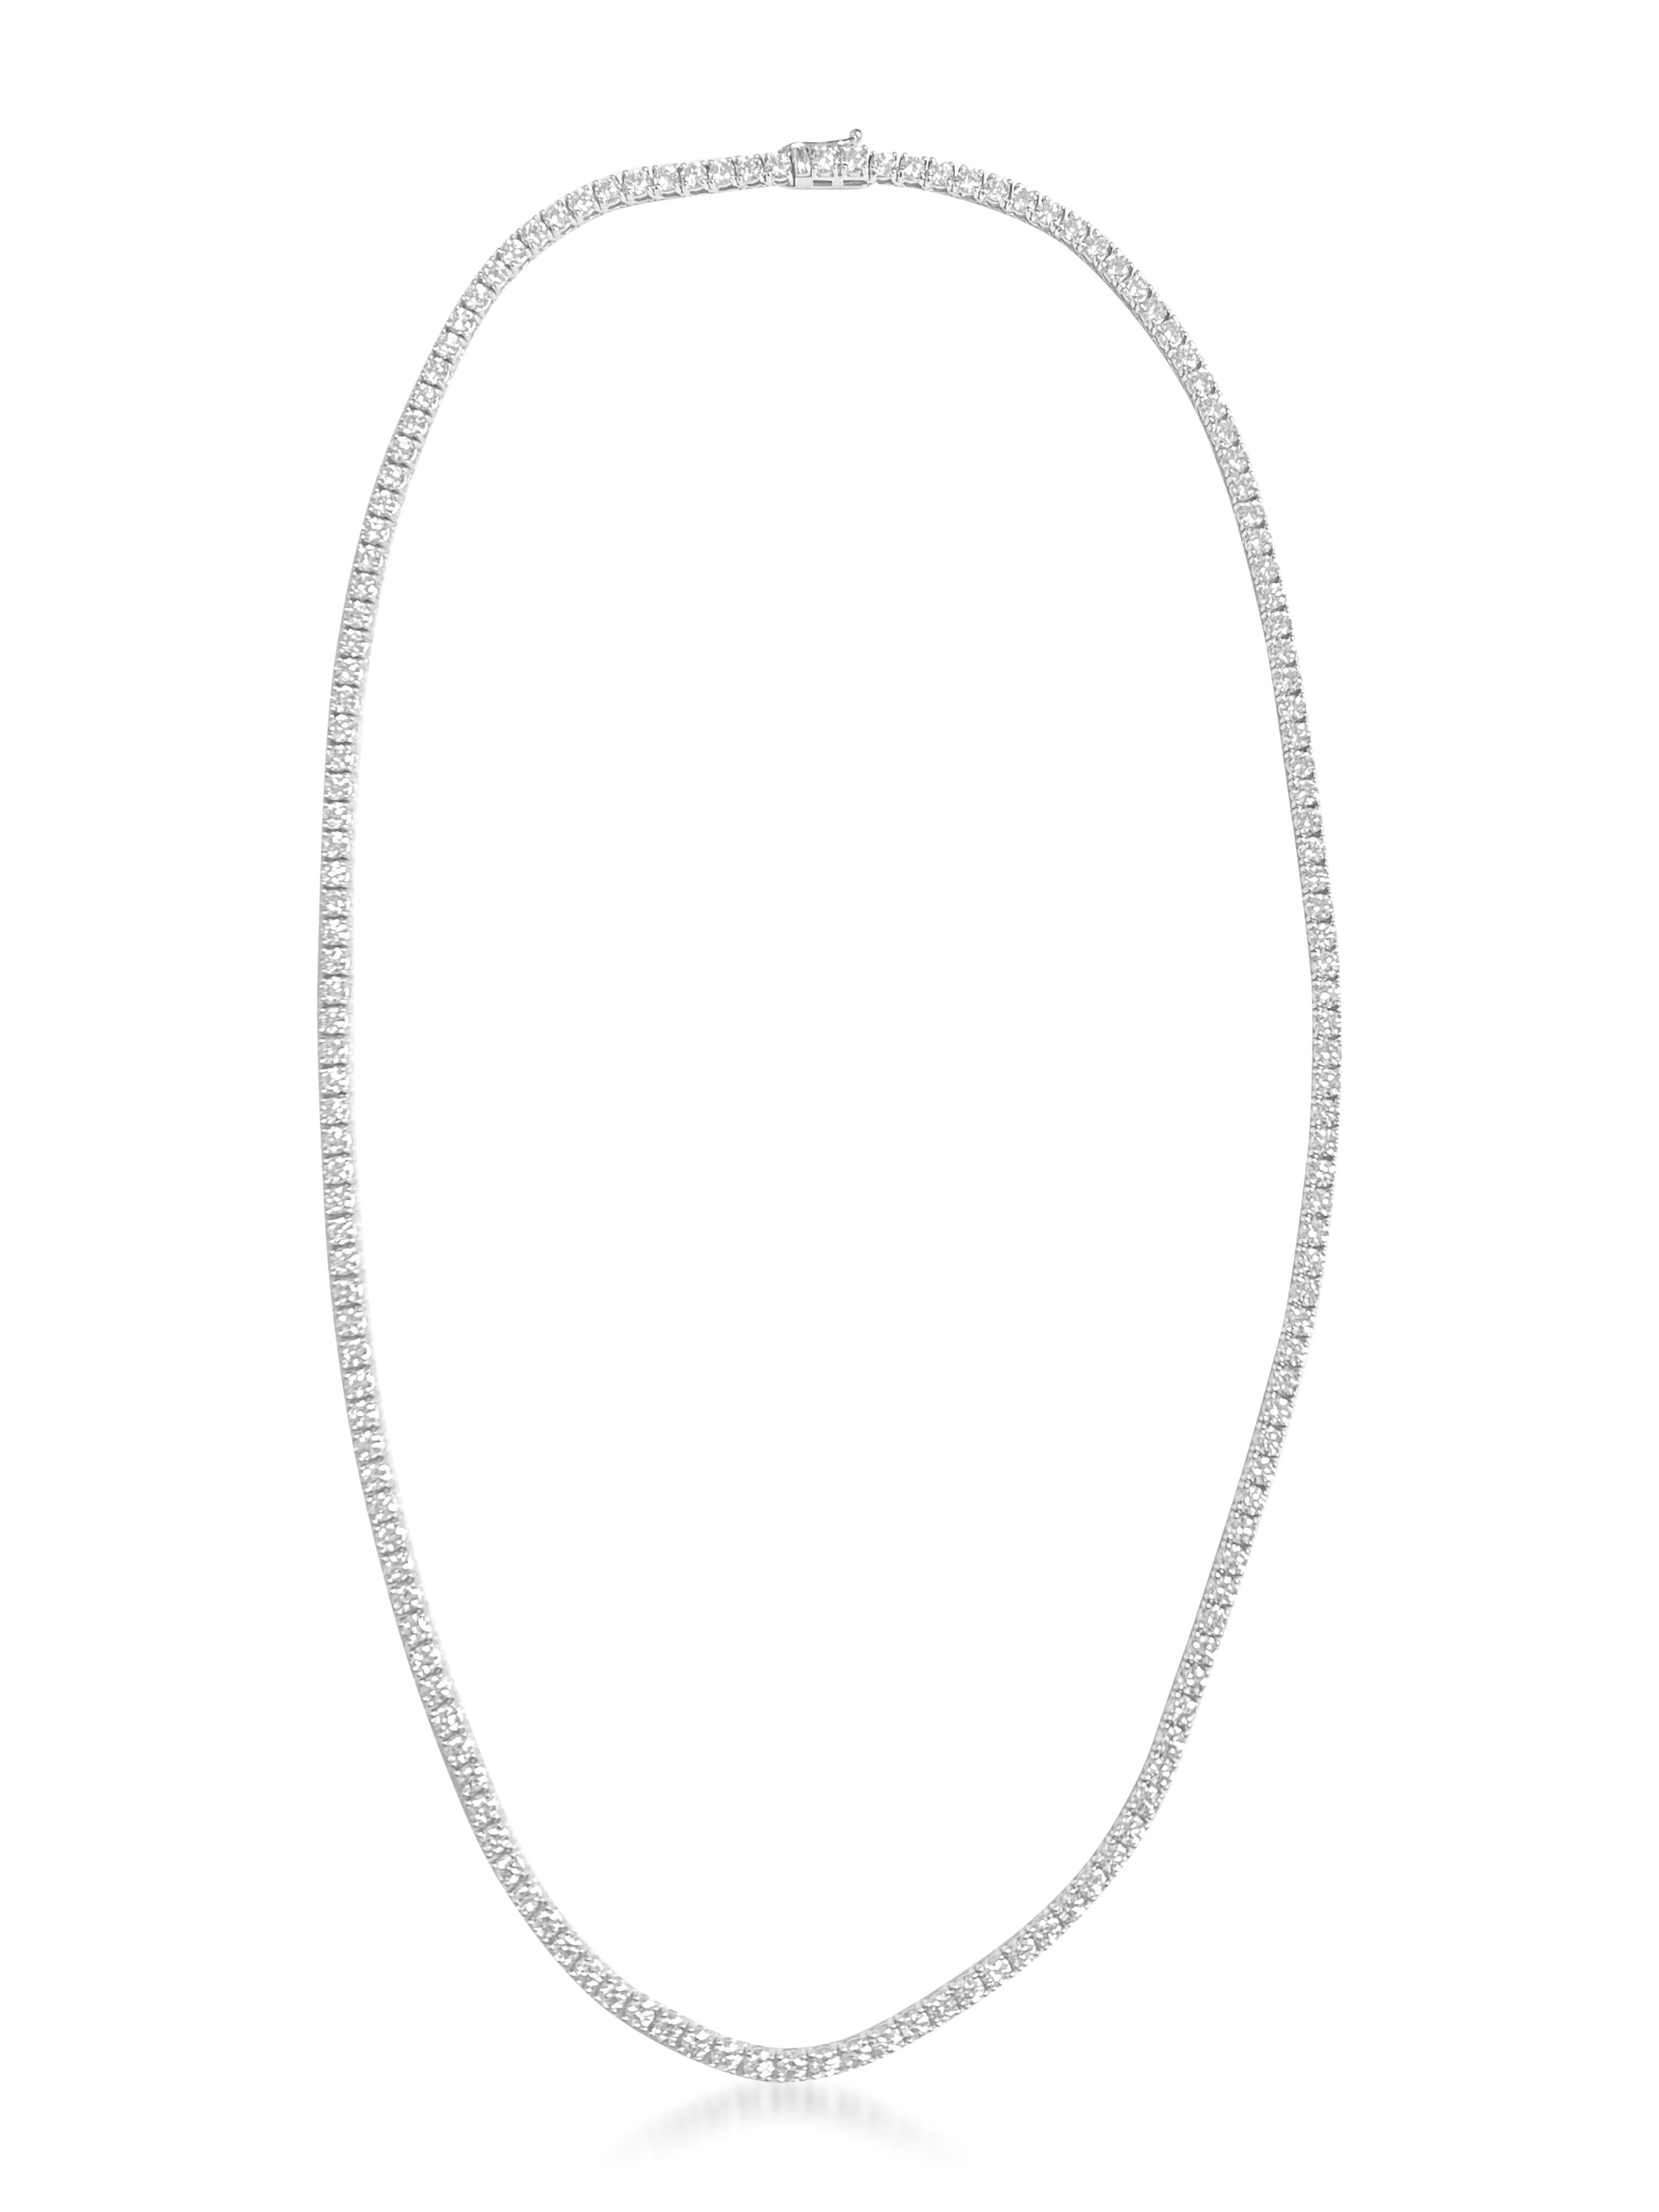 16ct VVS Diamond Tennis Necklace In Excellent Condition For Sale In Miami, FL